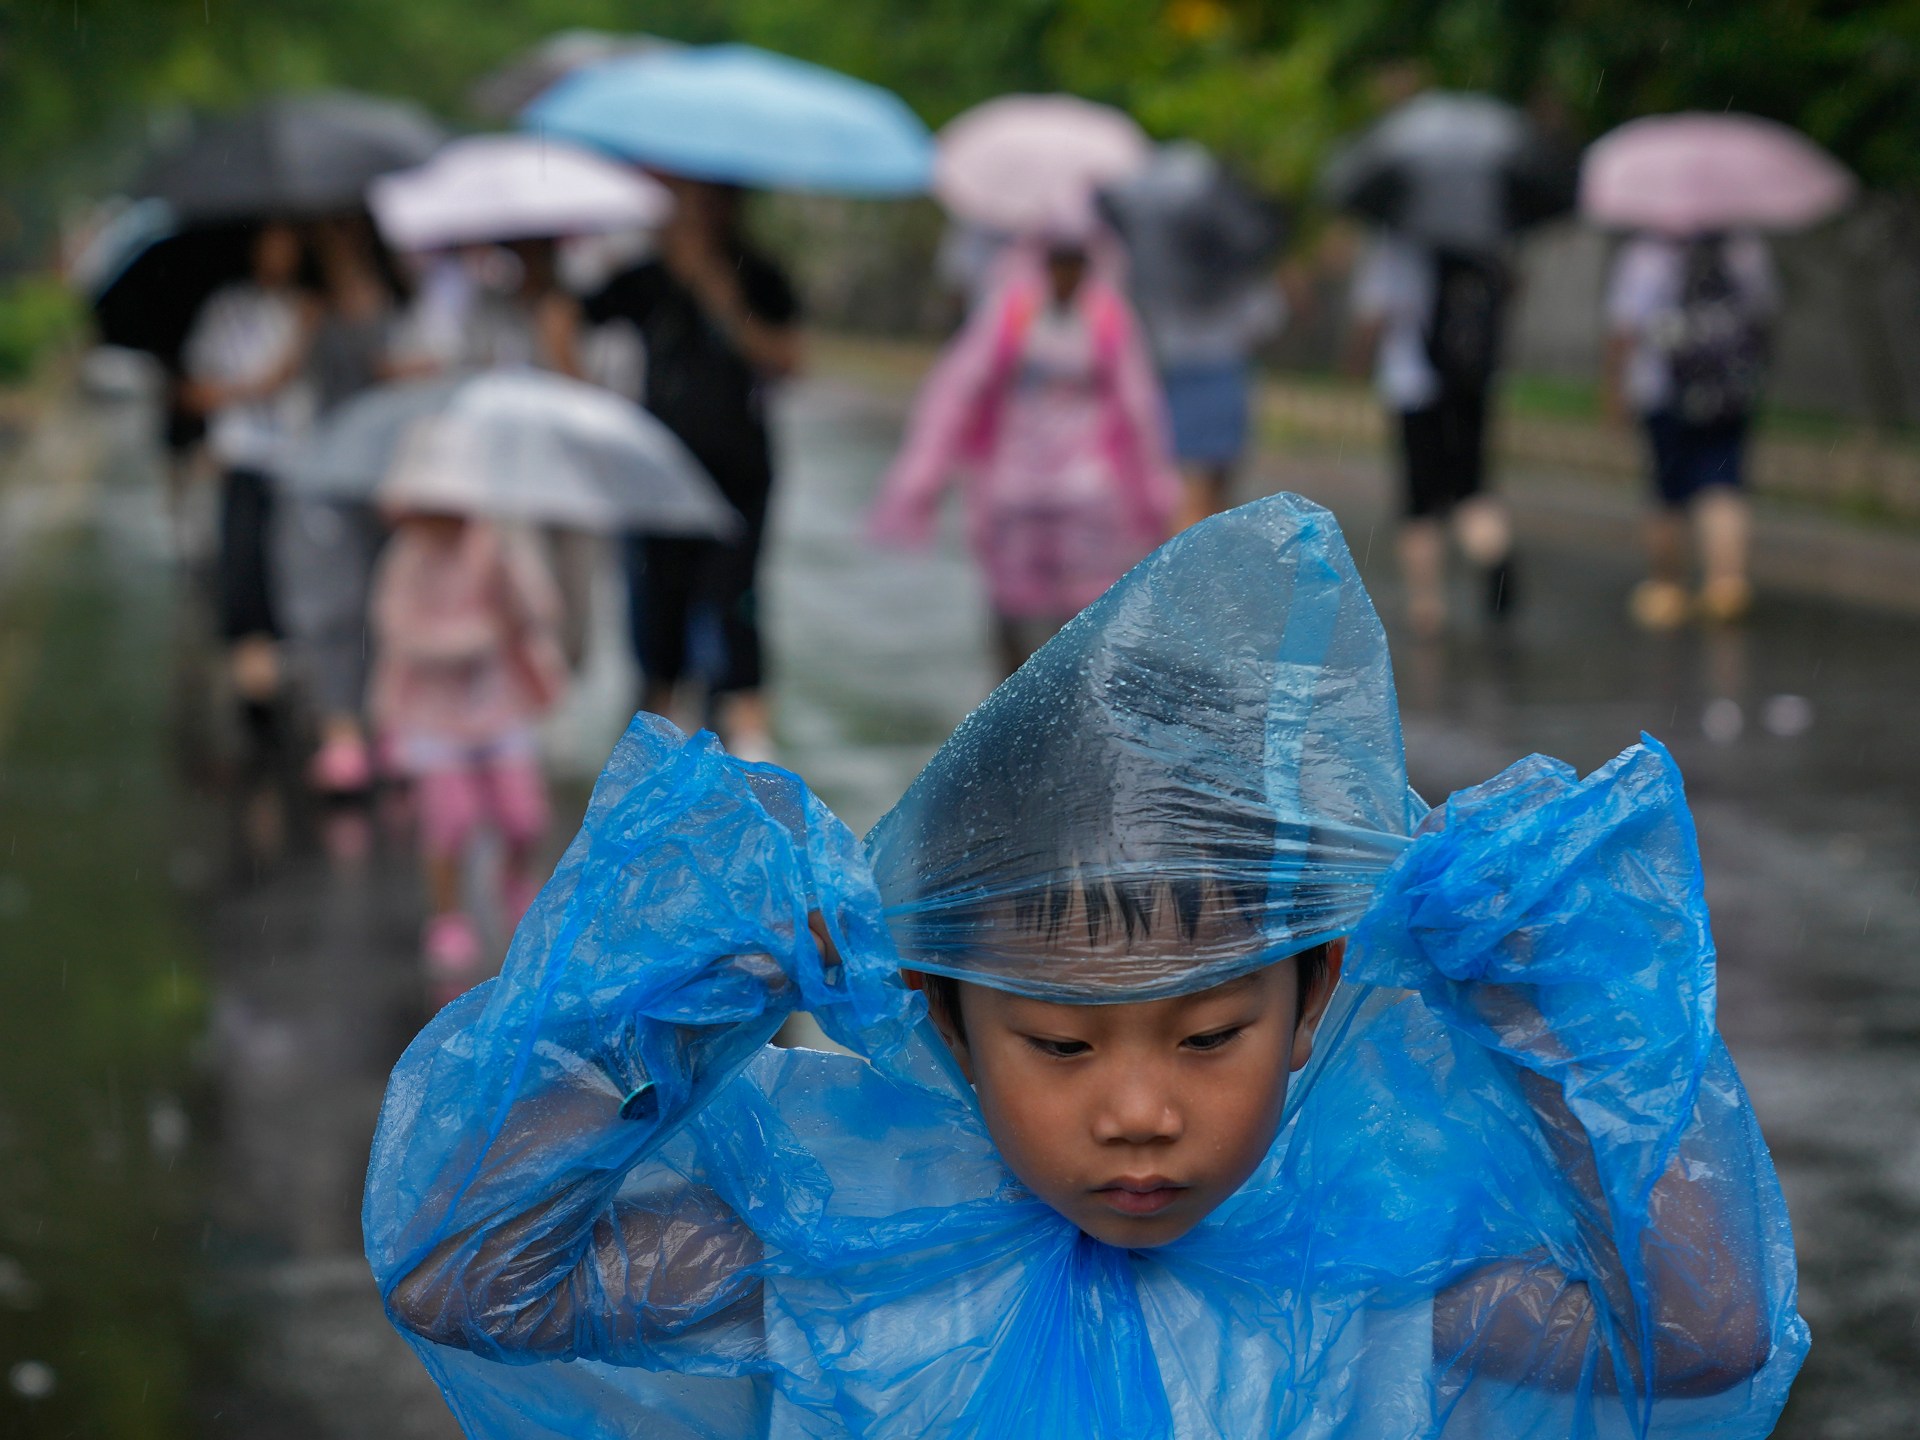 Ibu kota Tiongkok mencatat curah hujan terberat tahun ini saat Doksuri surut |  Berita Cuaca